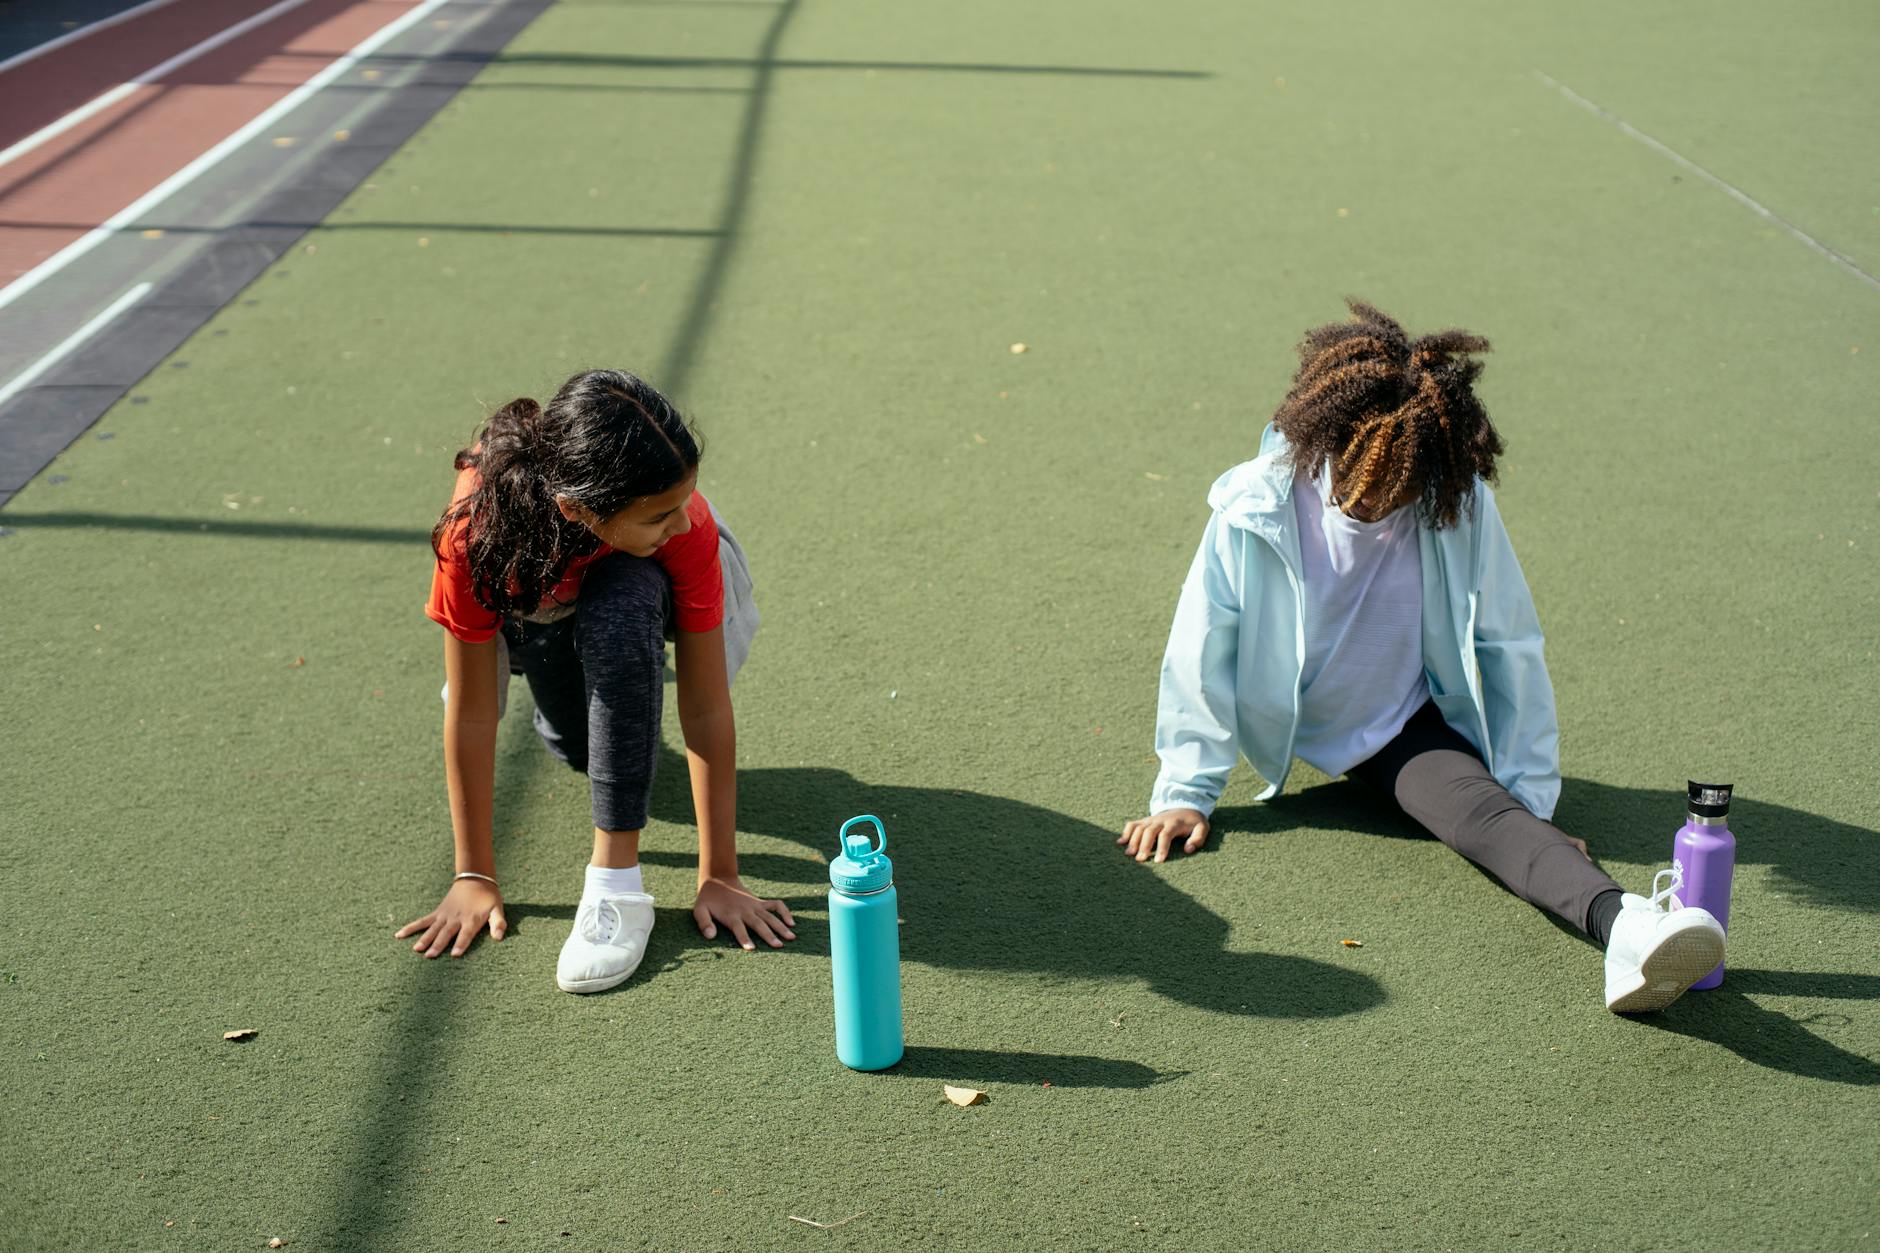 Black girl doing split while friend stretching before training on stadium